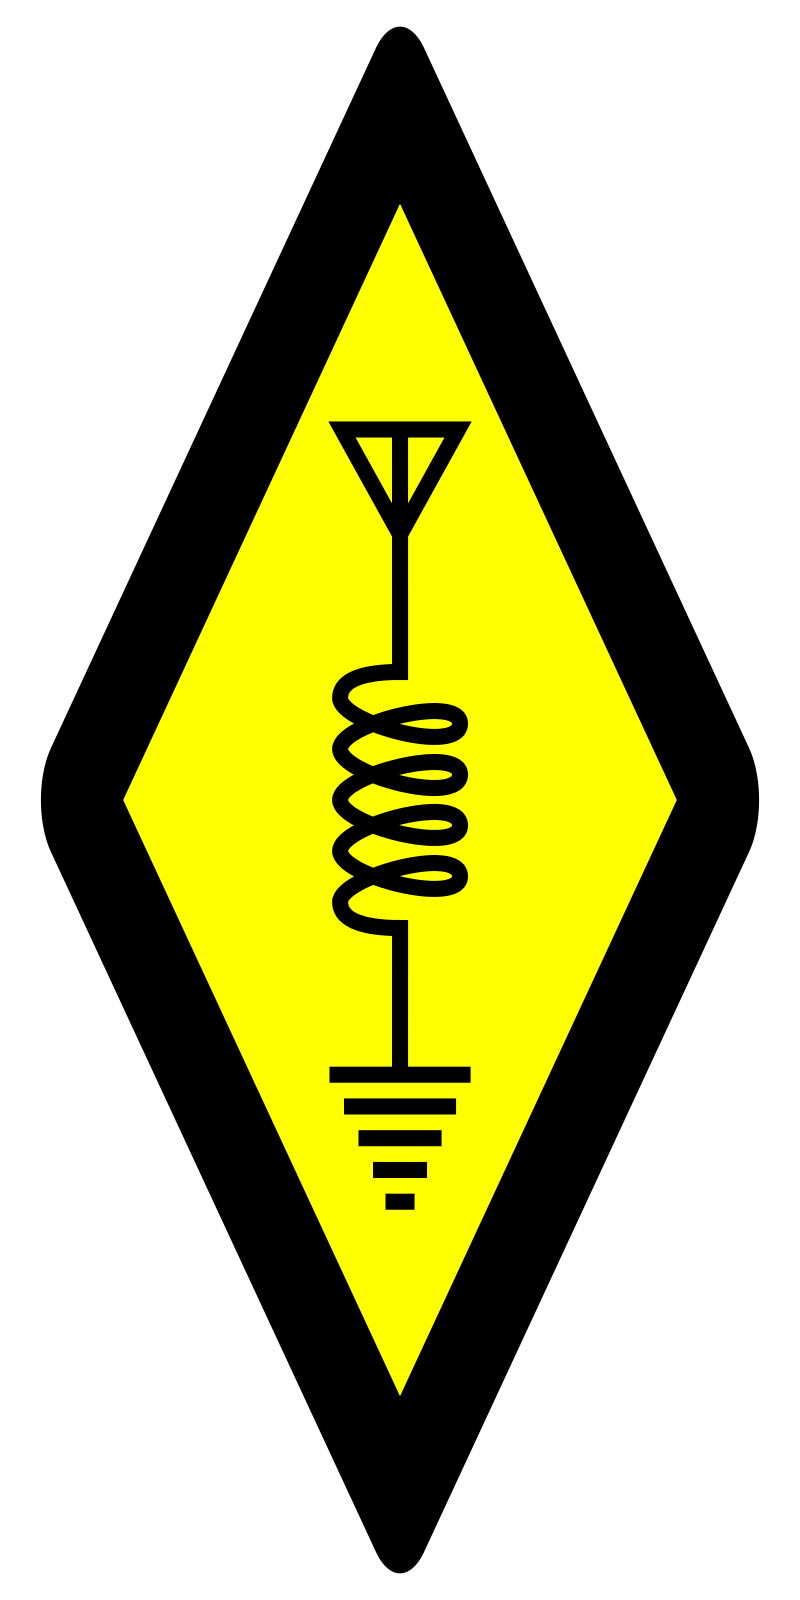 Yellow Diamond amateur radio symbol